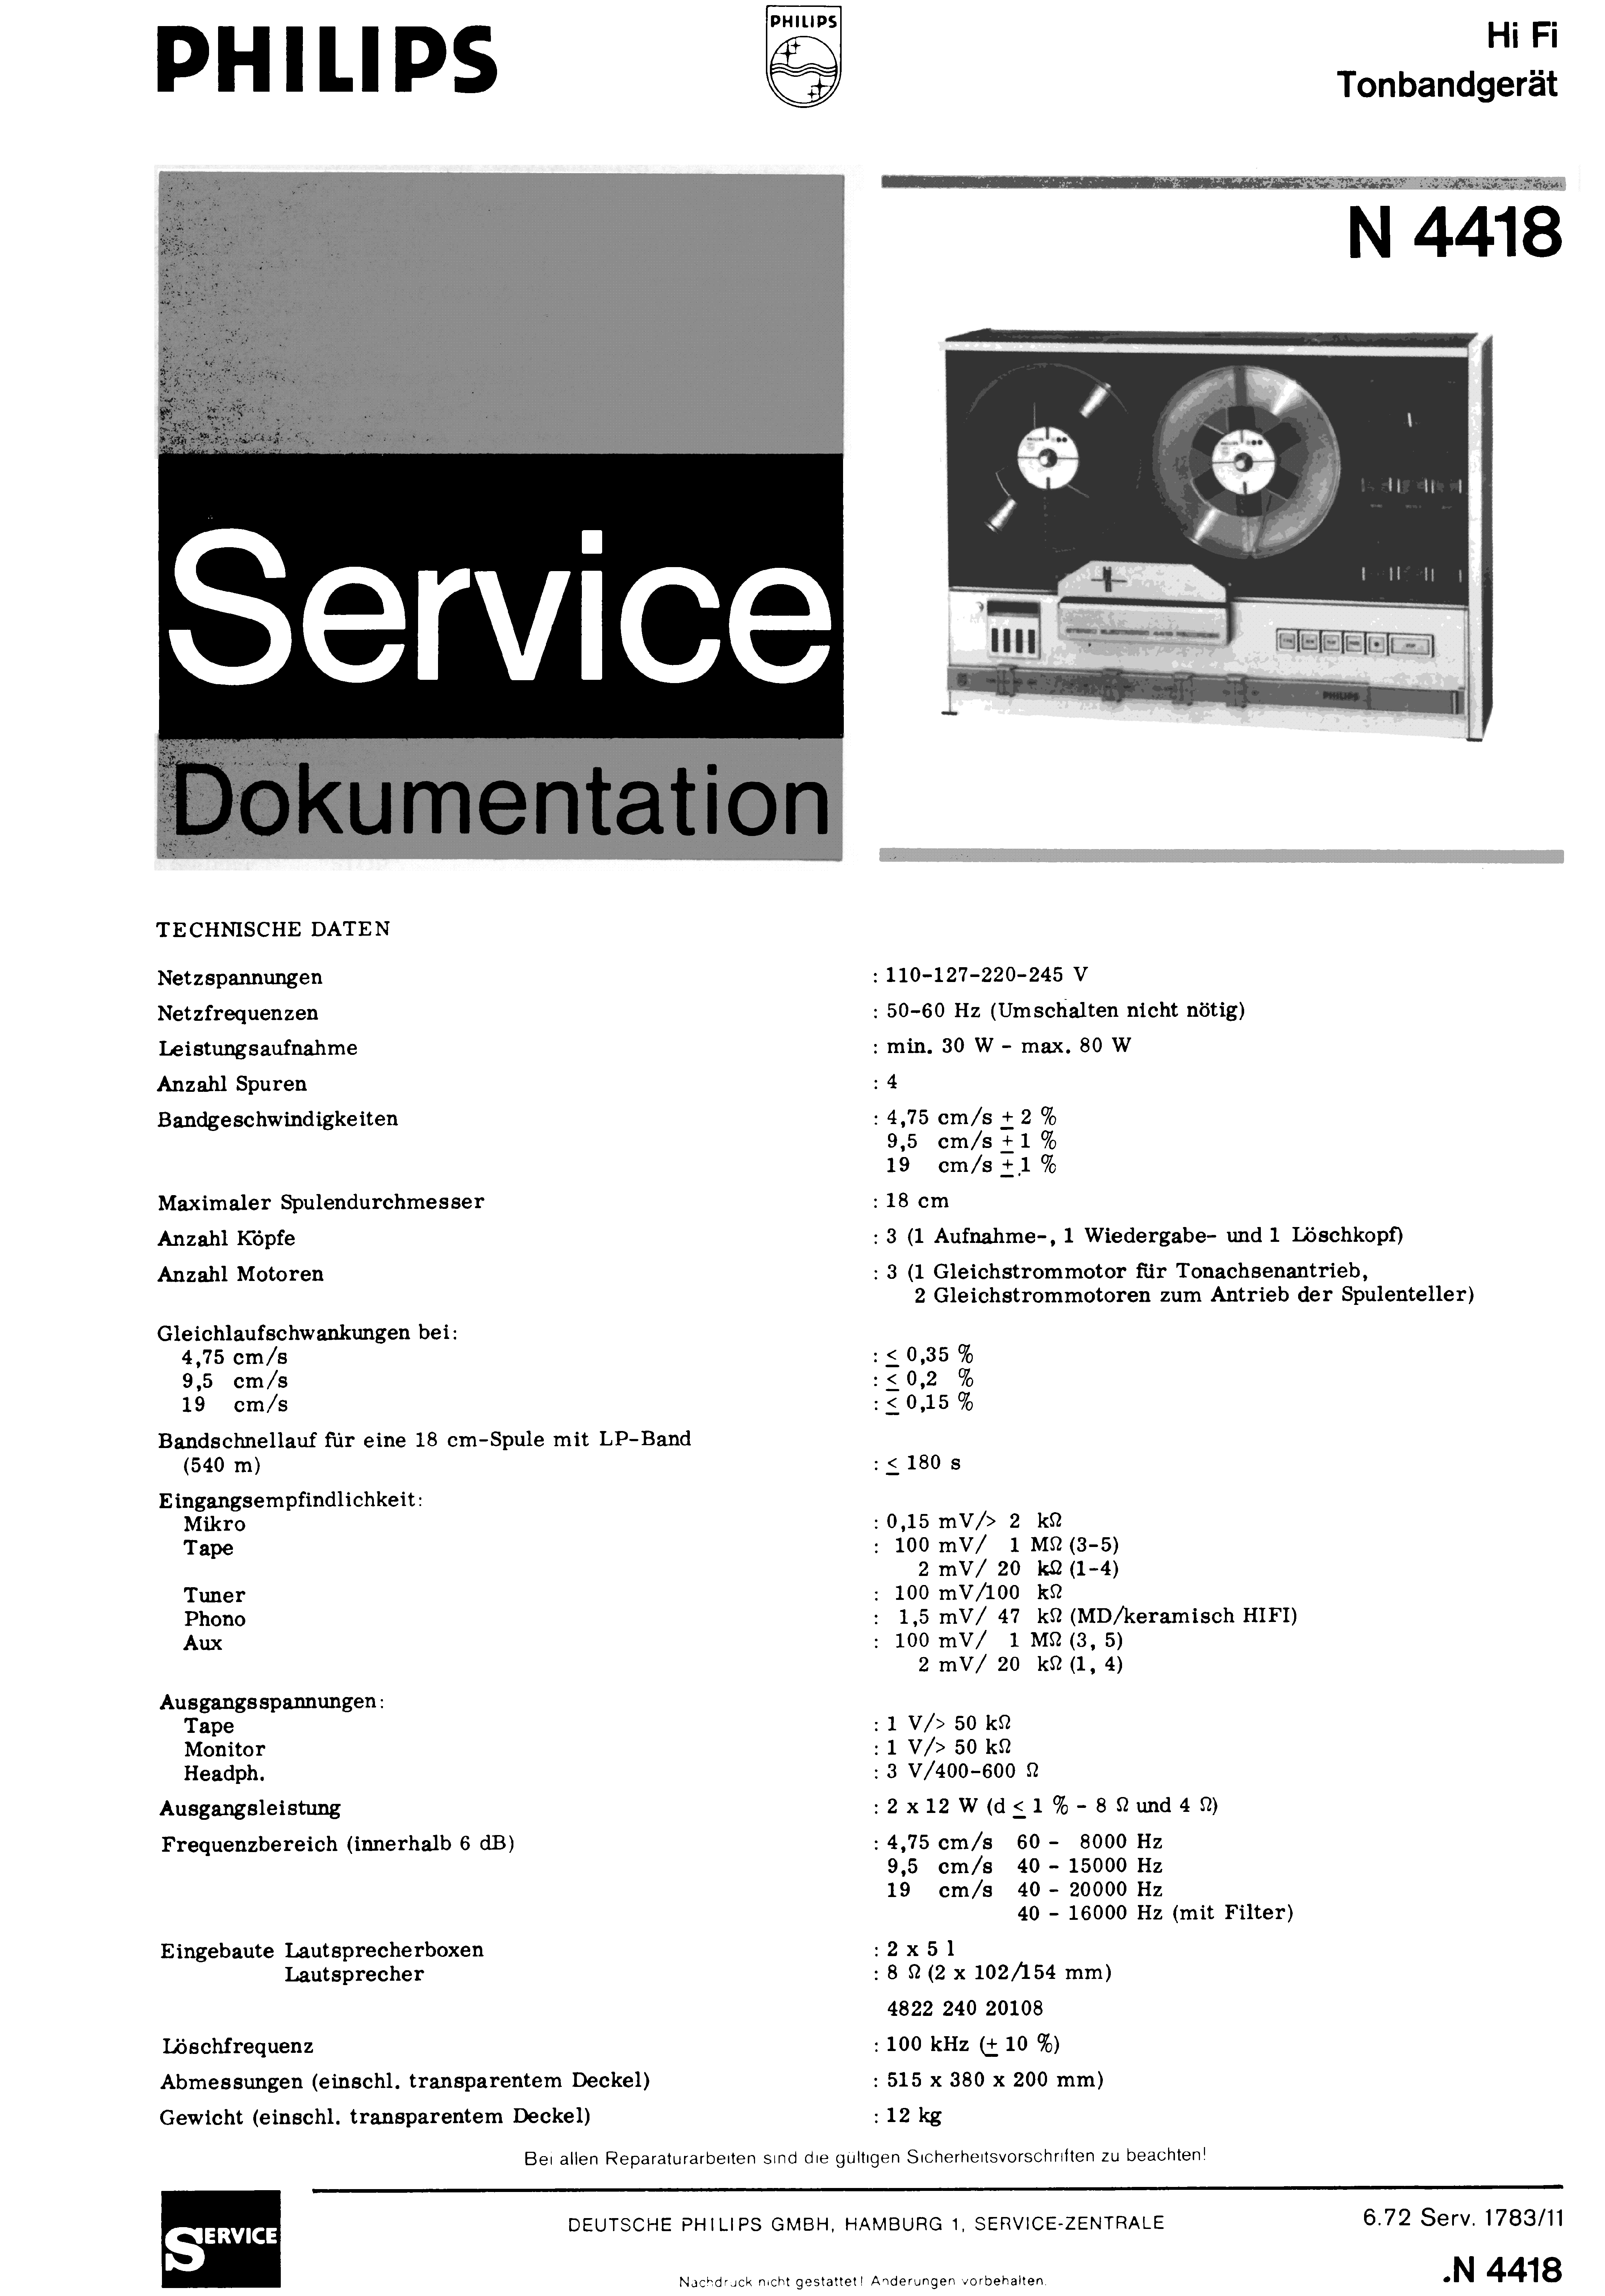 PHILIPS HIFI TONBANDGERAET N4418 SM service manual (1st page)